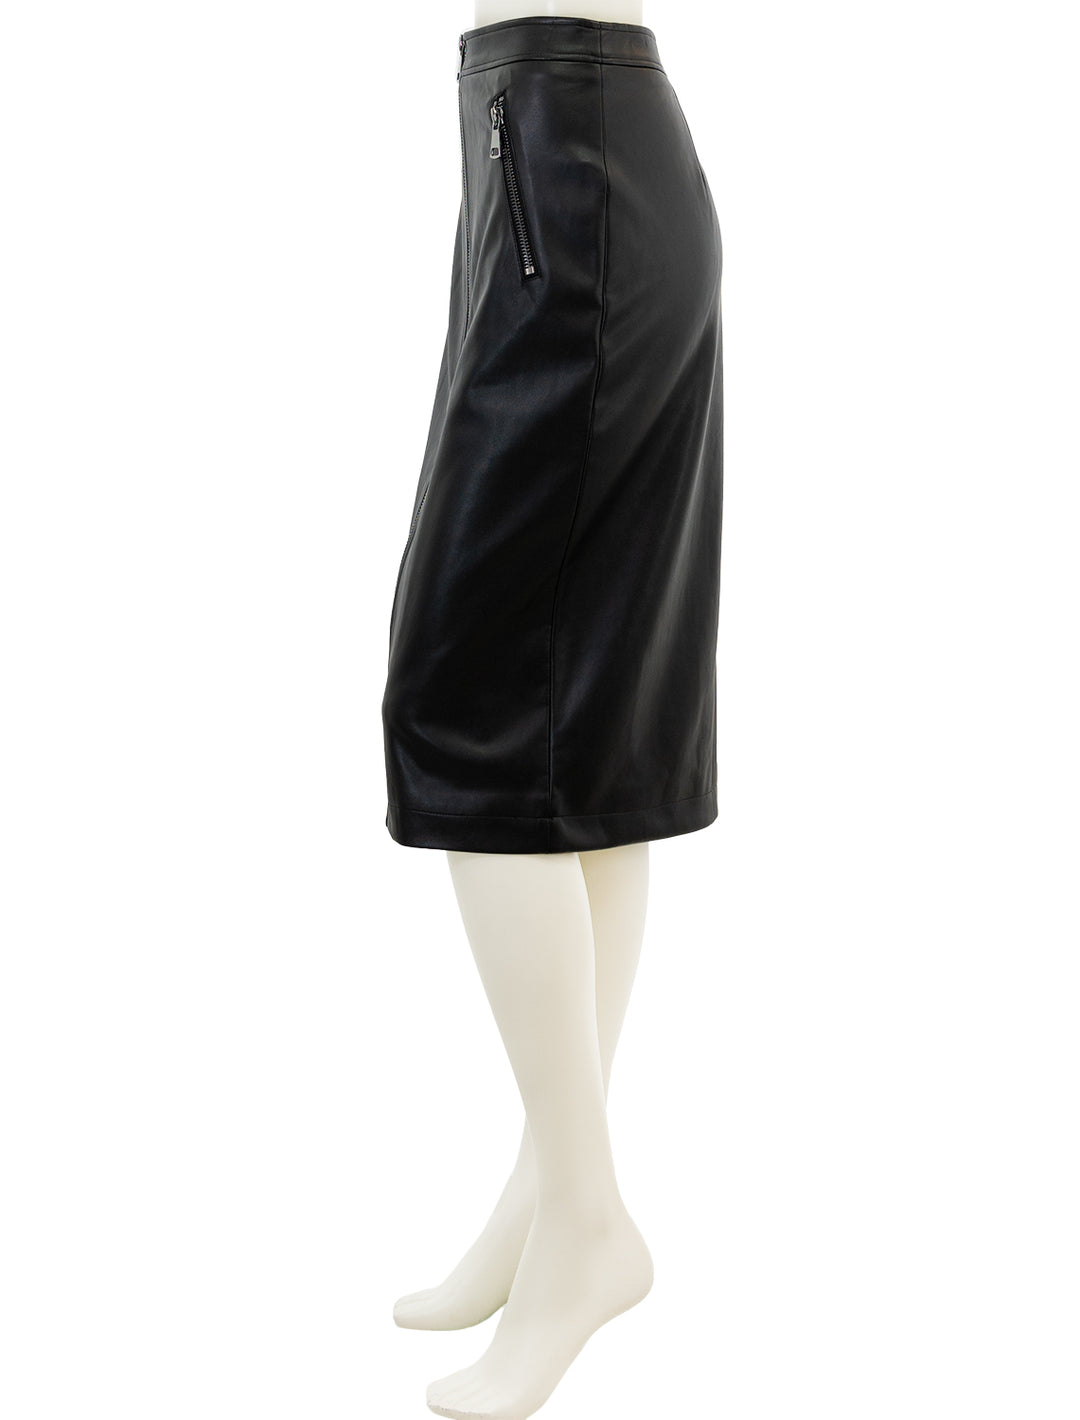 Side view of Essentiel Antwerp's encourage faux leather skirt in black.